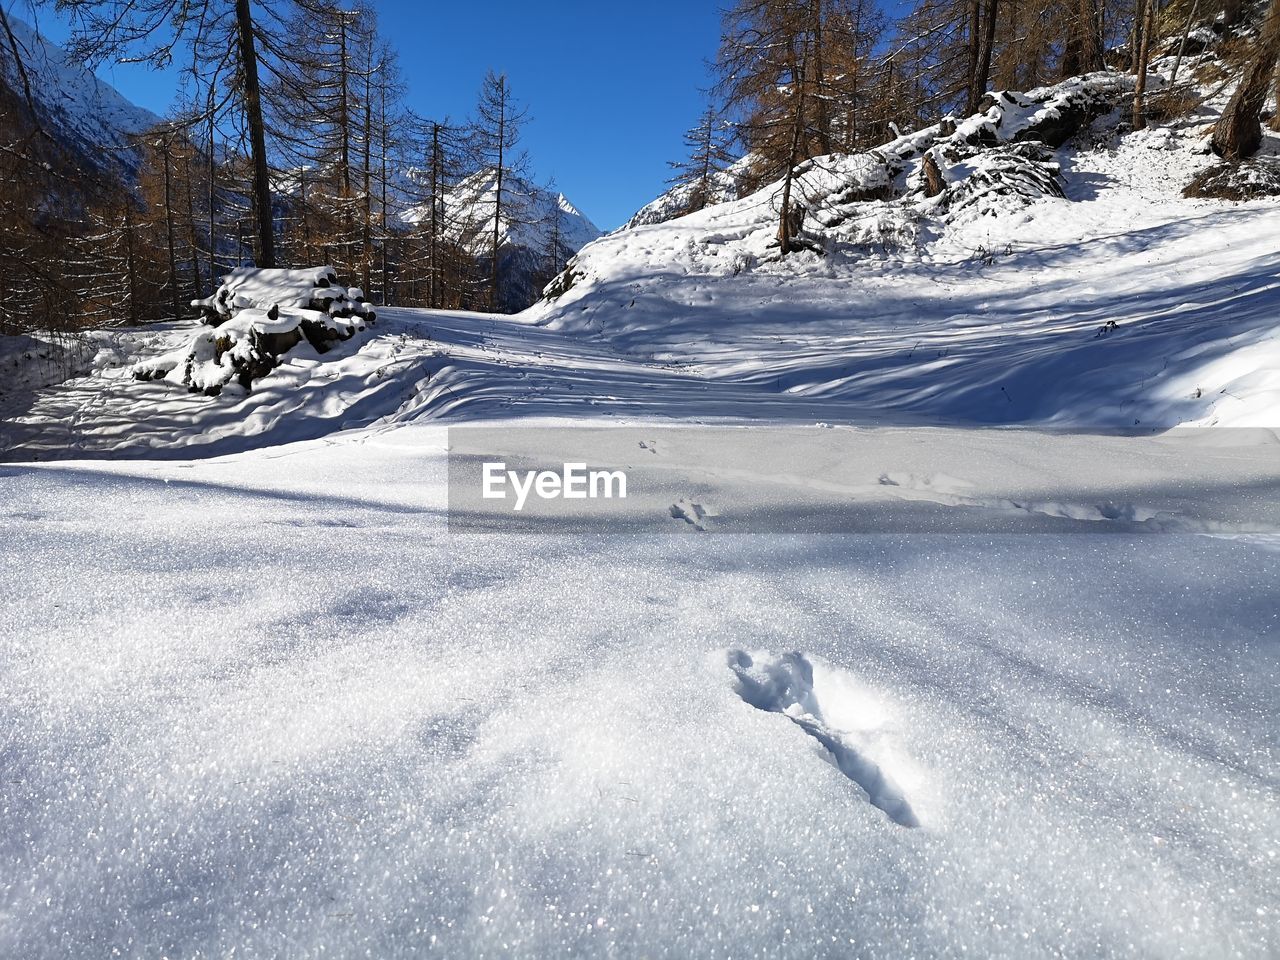 Animal tracks on snow covered landscape